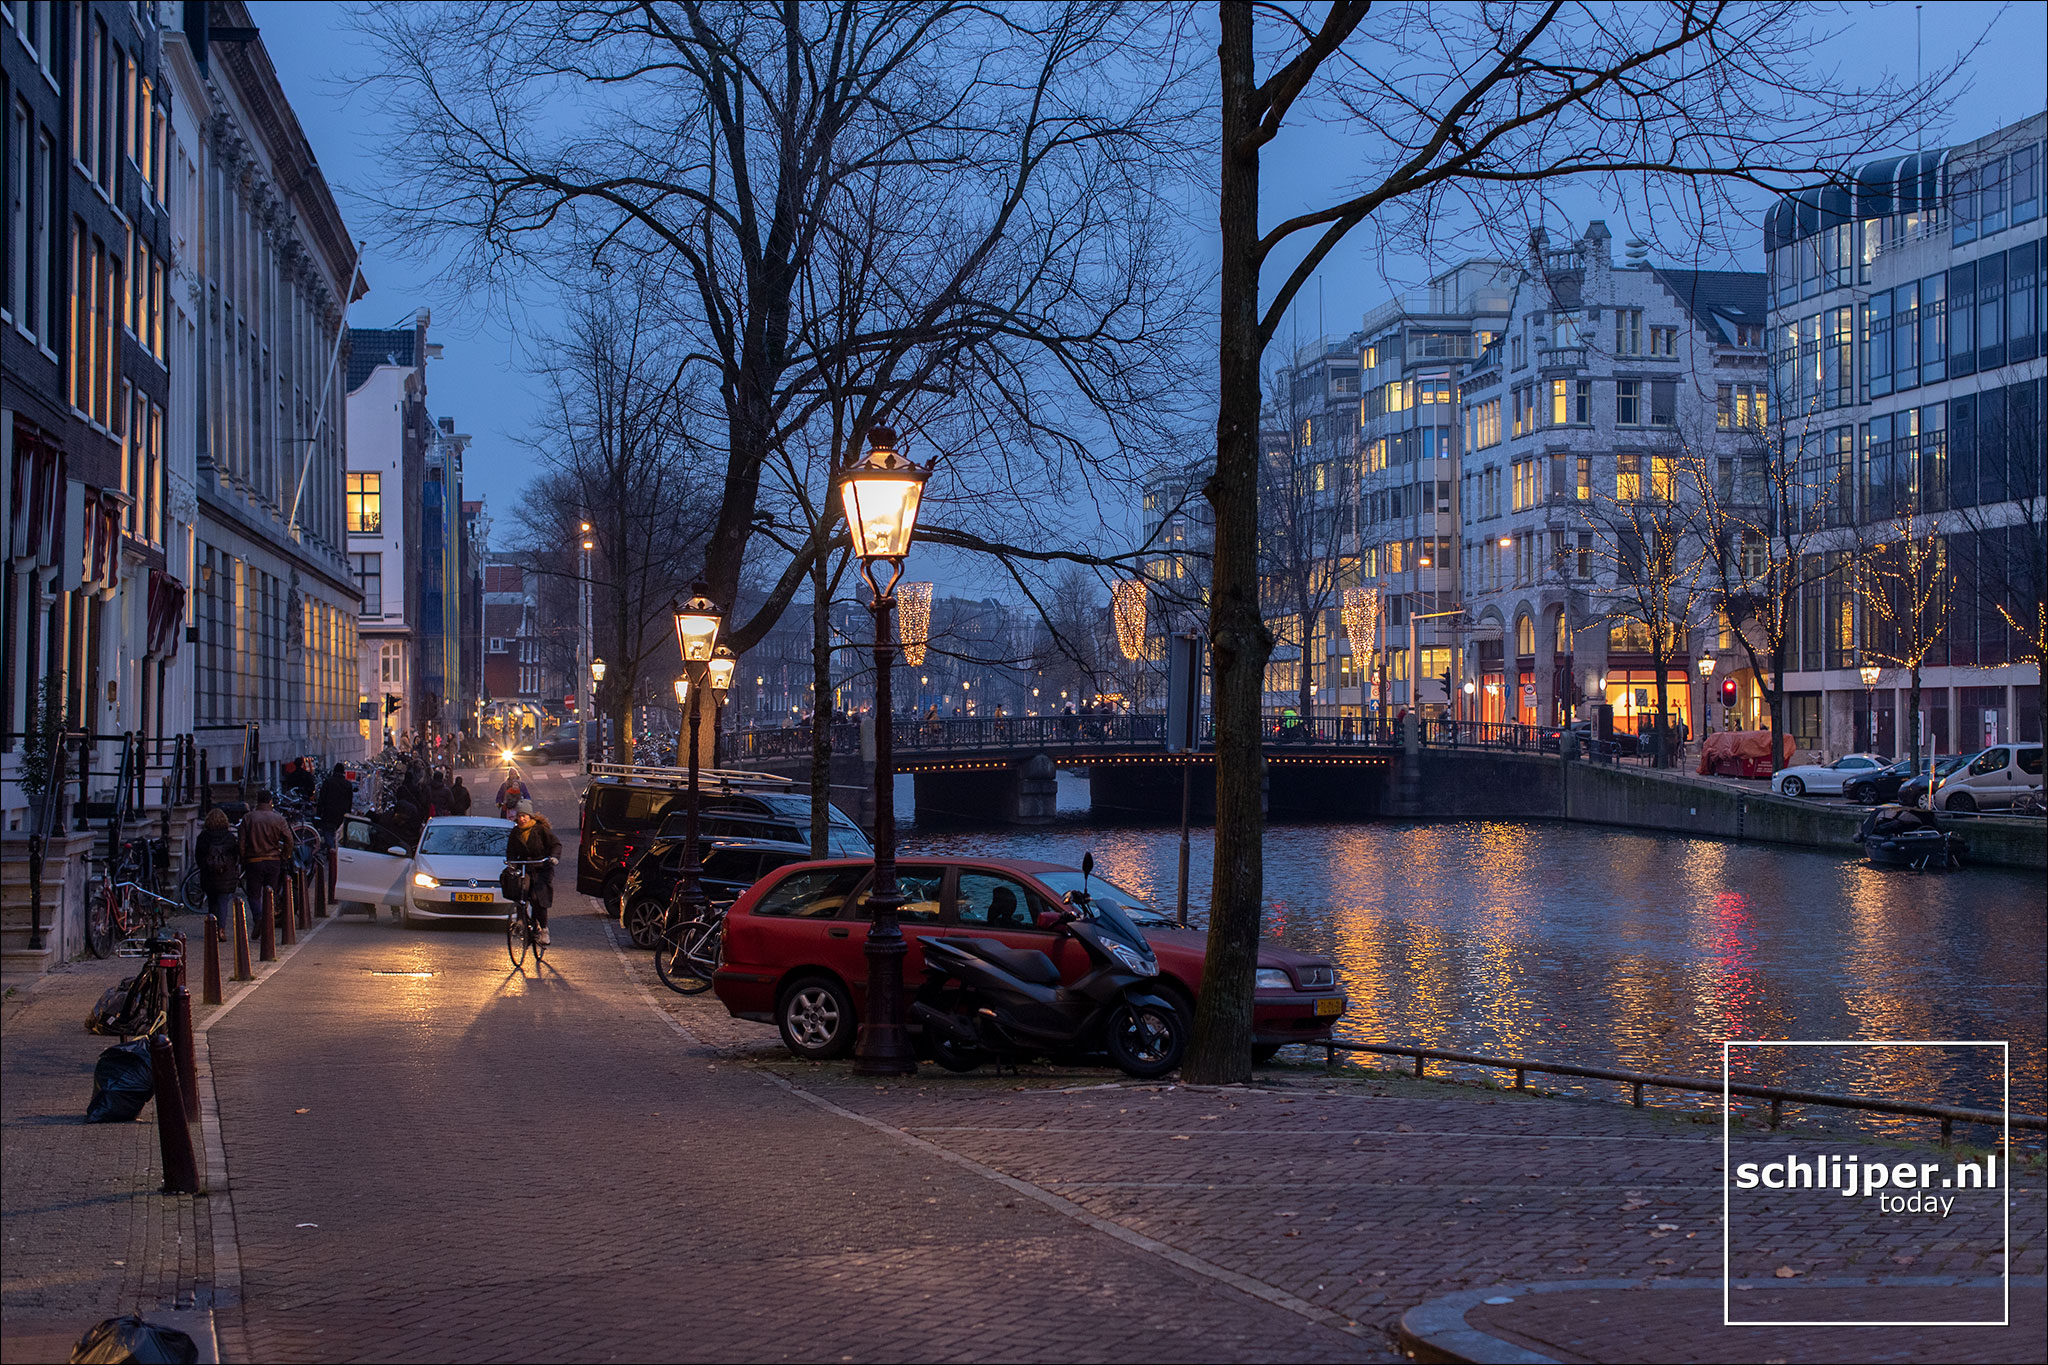 The Netherlands, Amsterdam, 5 december 2019